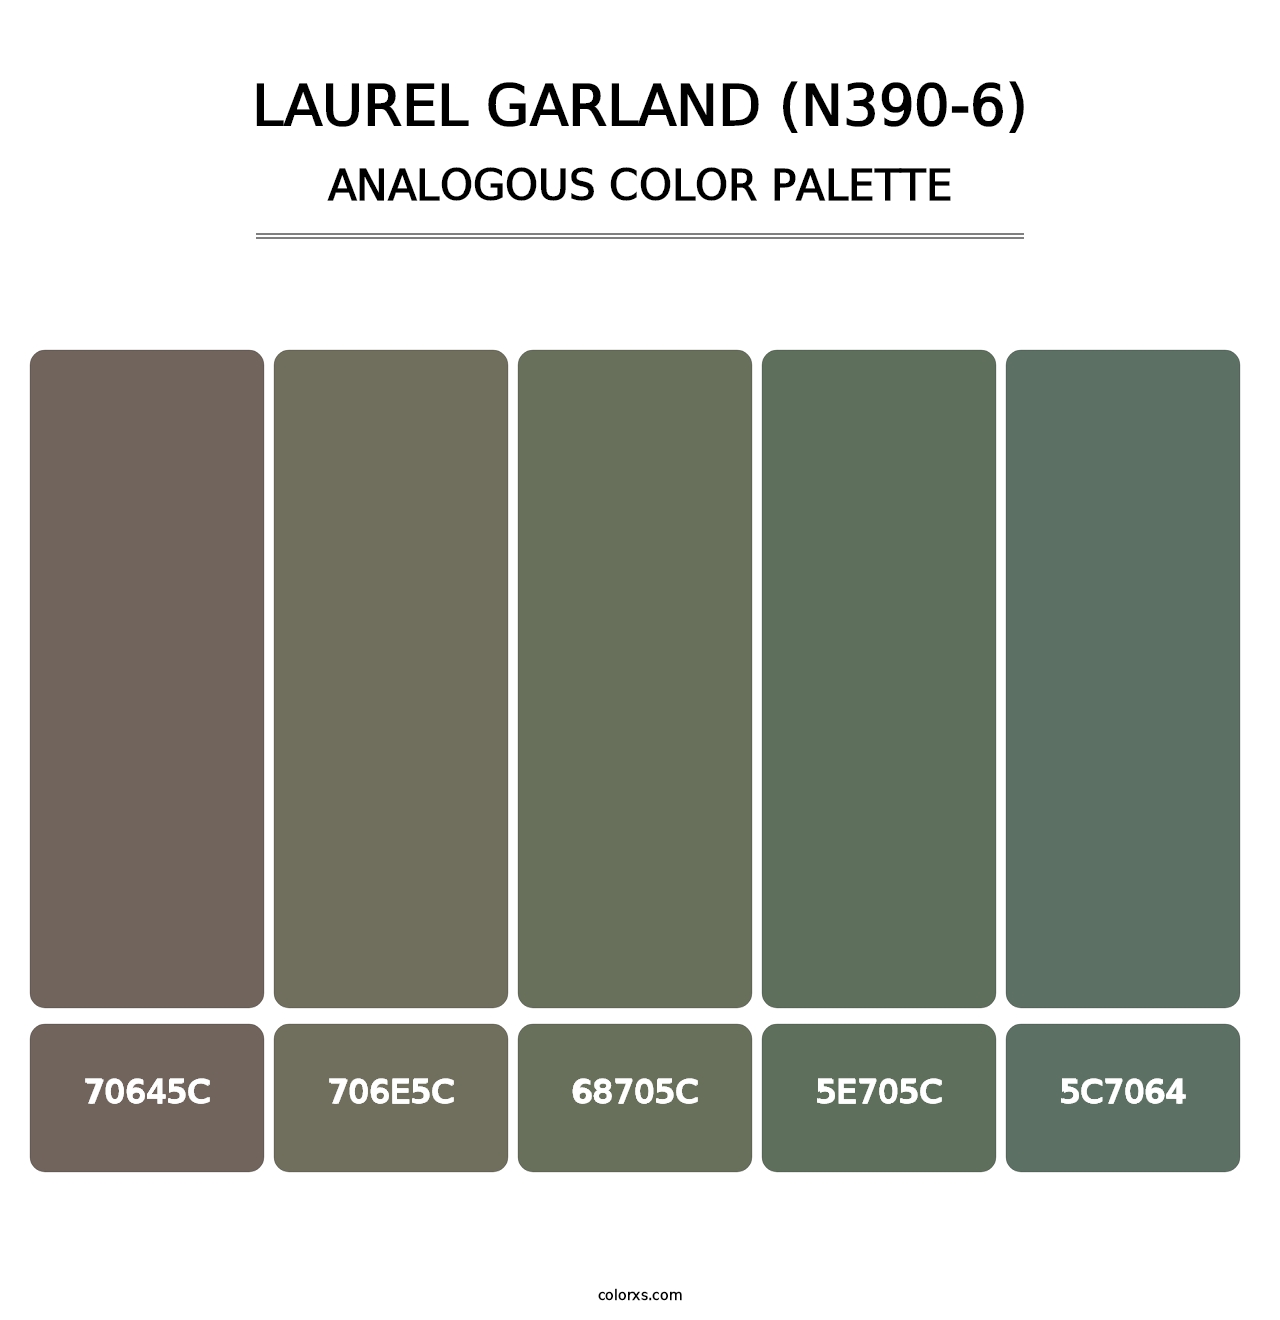 Laurel Garland (N390-6) - Analogous Color Palette